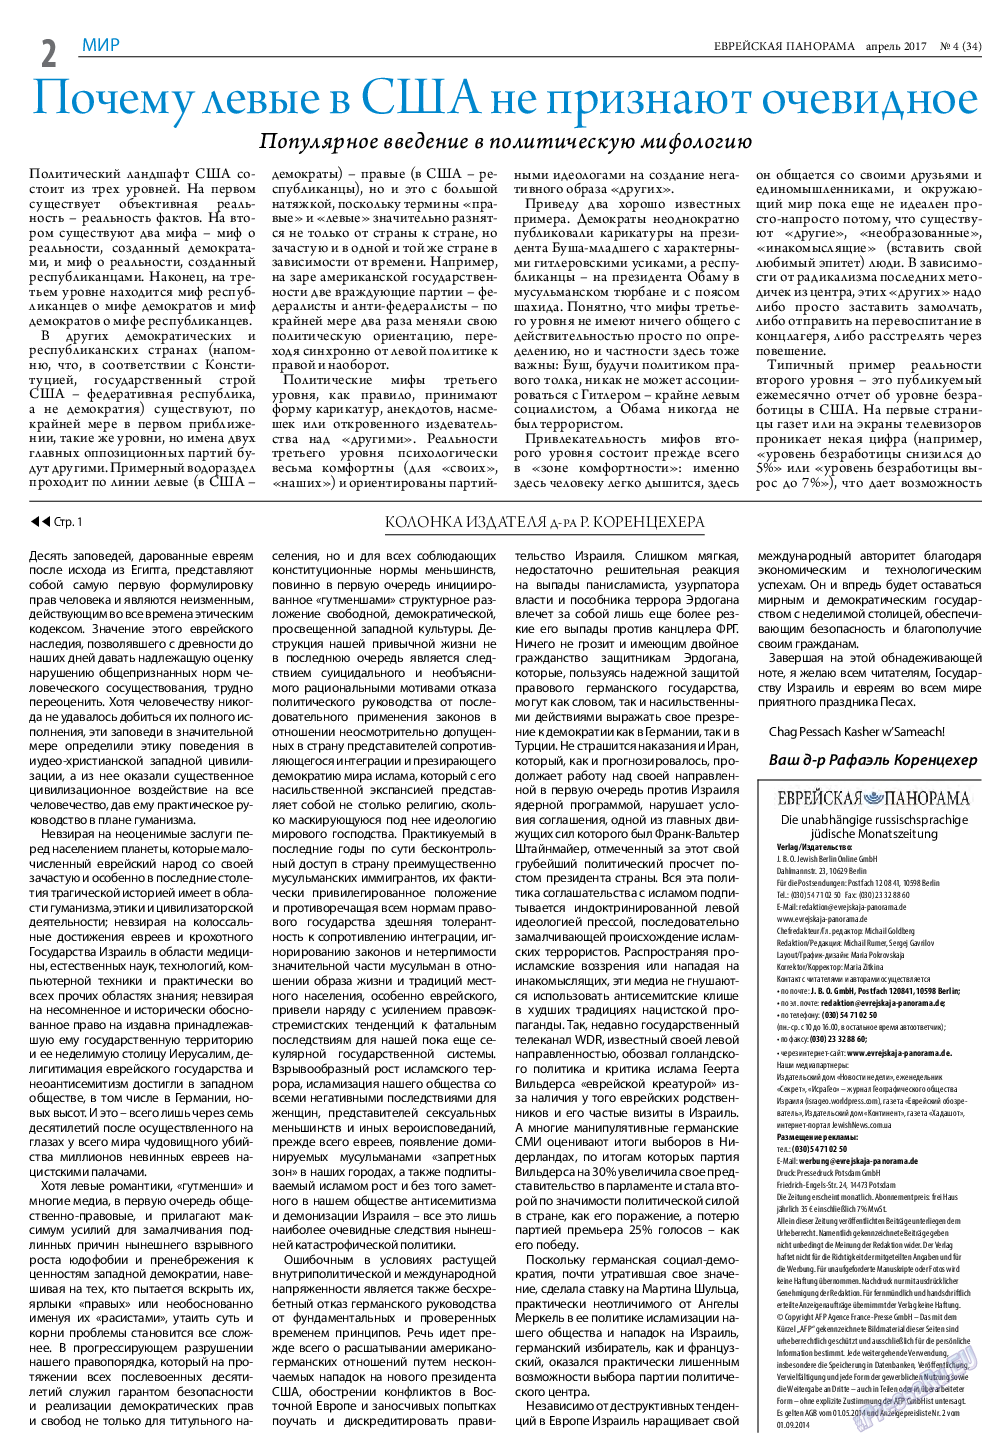 Еврейская панорама, газета. 2017 №4 стр.2